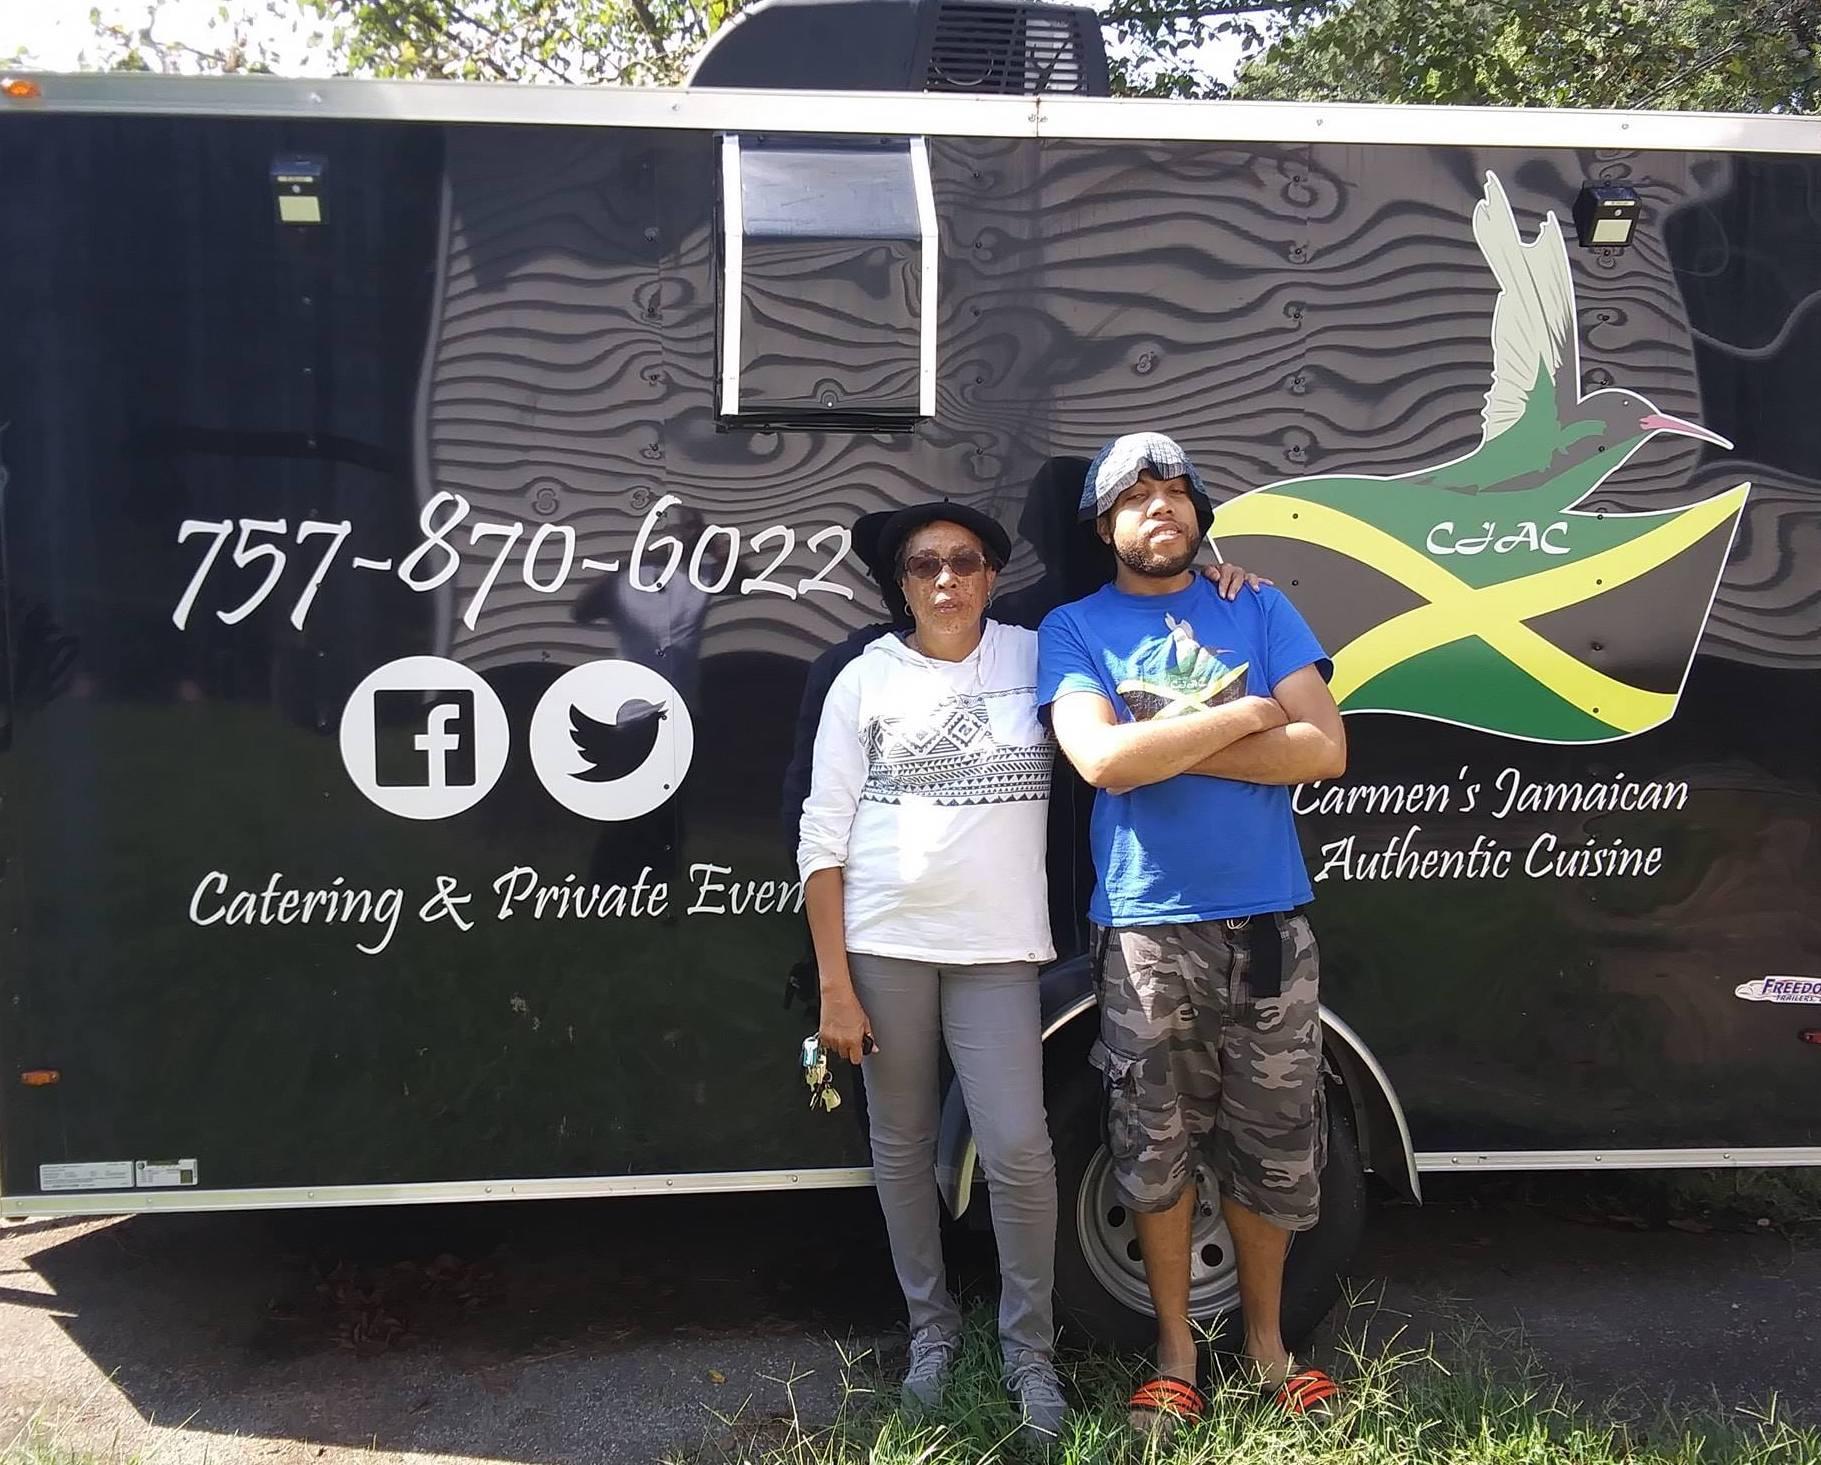 carmen's authentic Jamaican food truck williamsburg virginia serving traditional Jamaican dishes in williamsburg